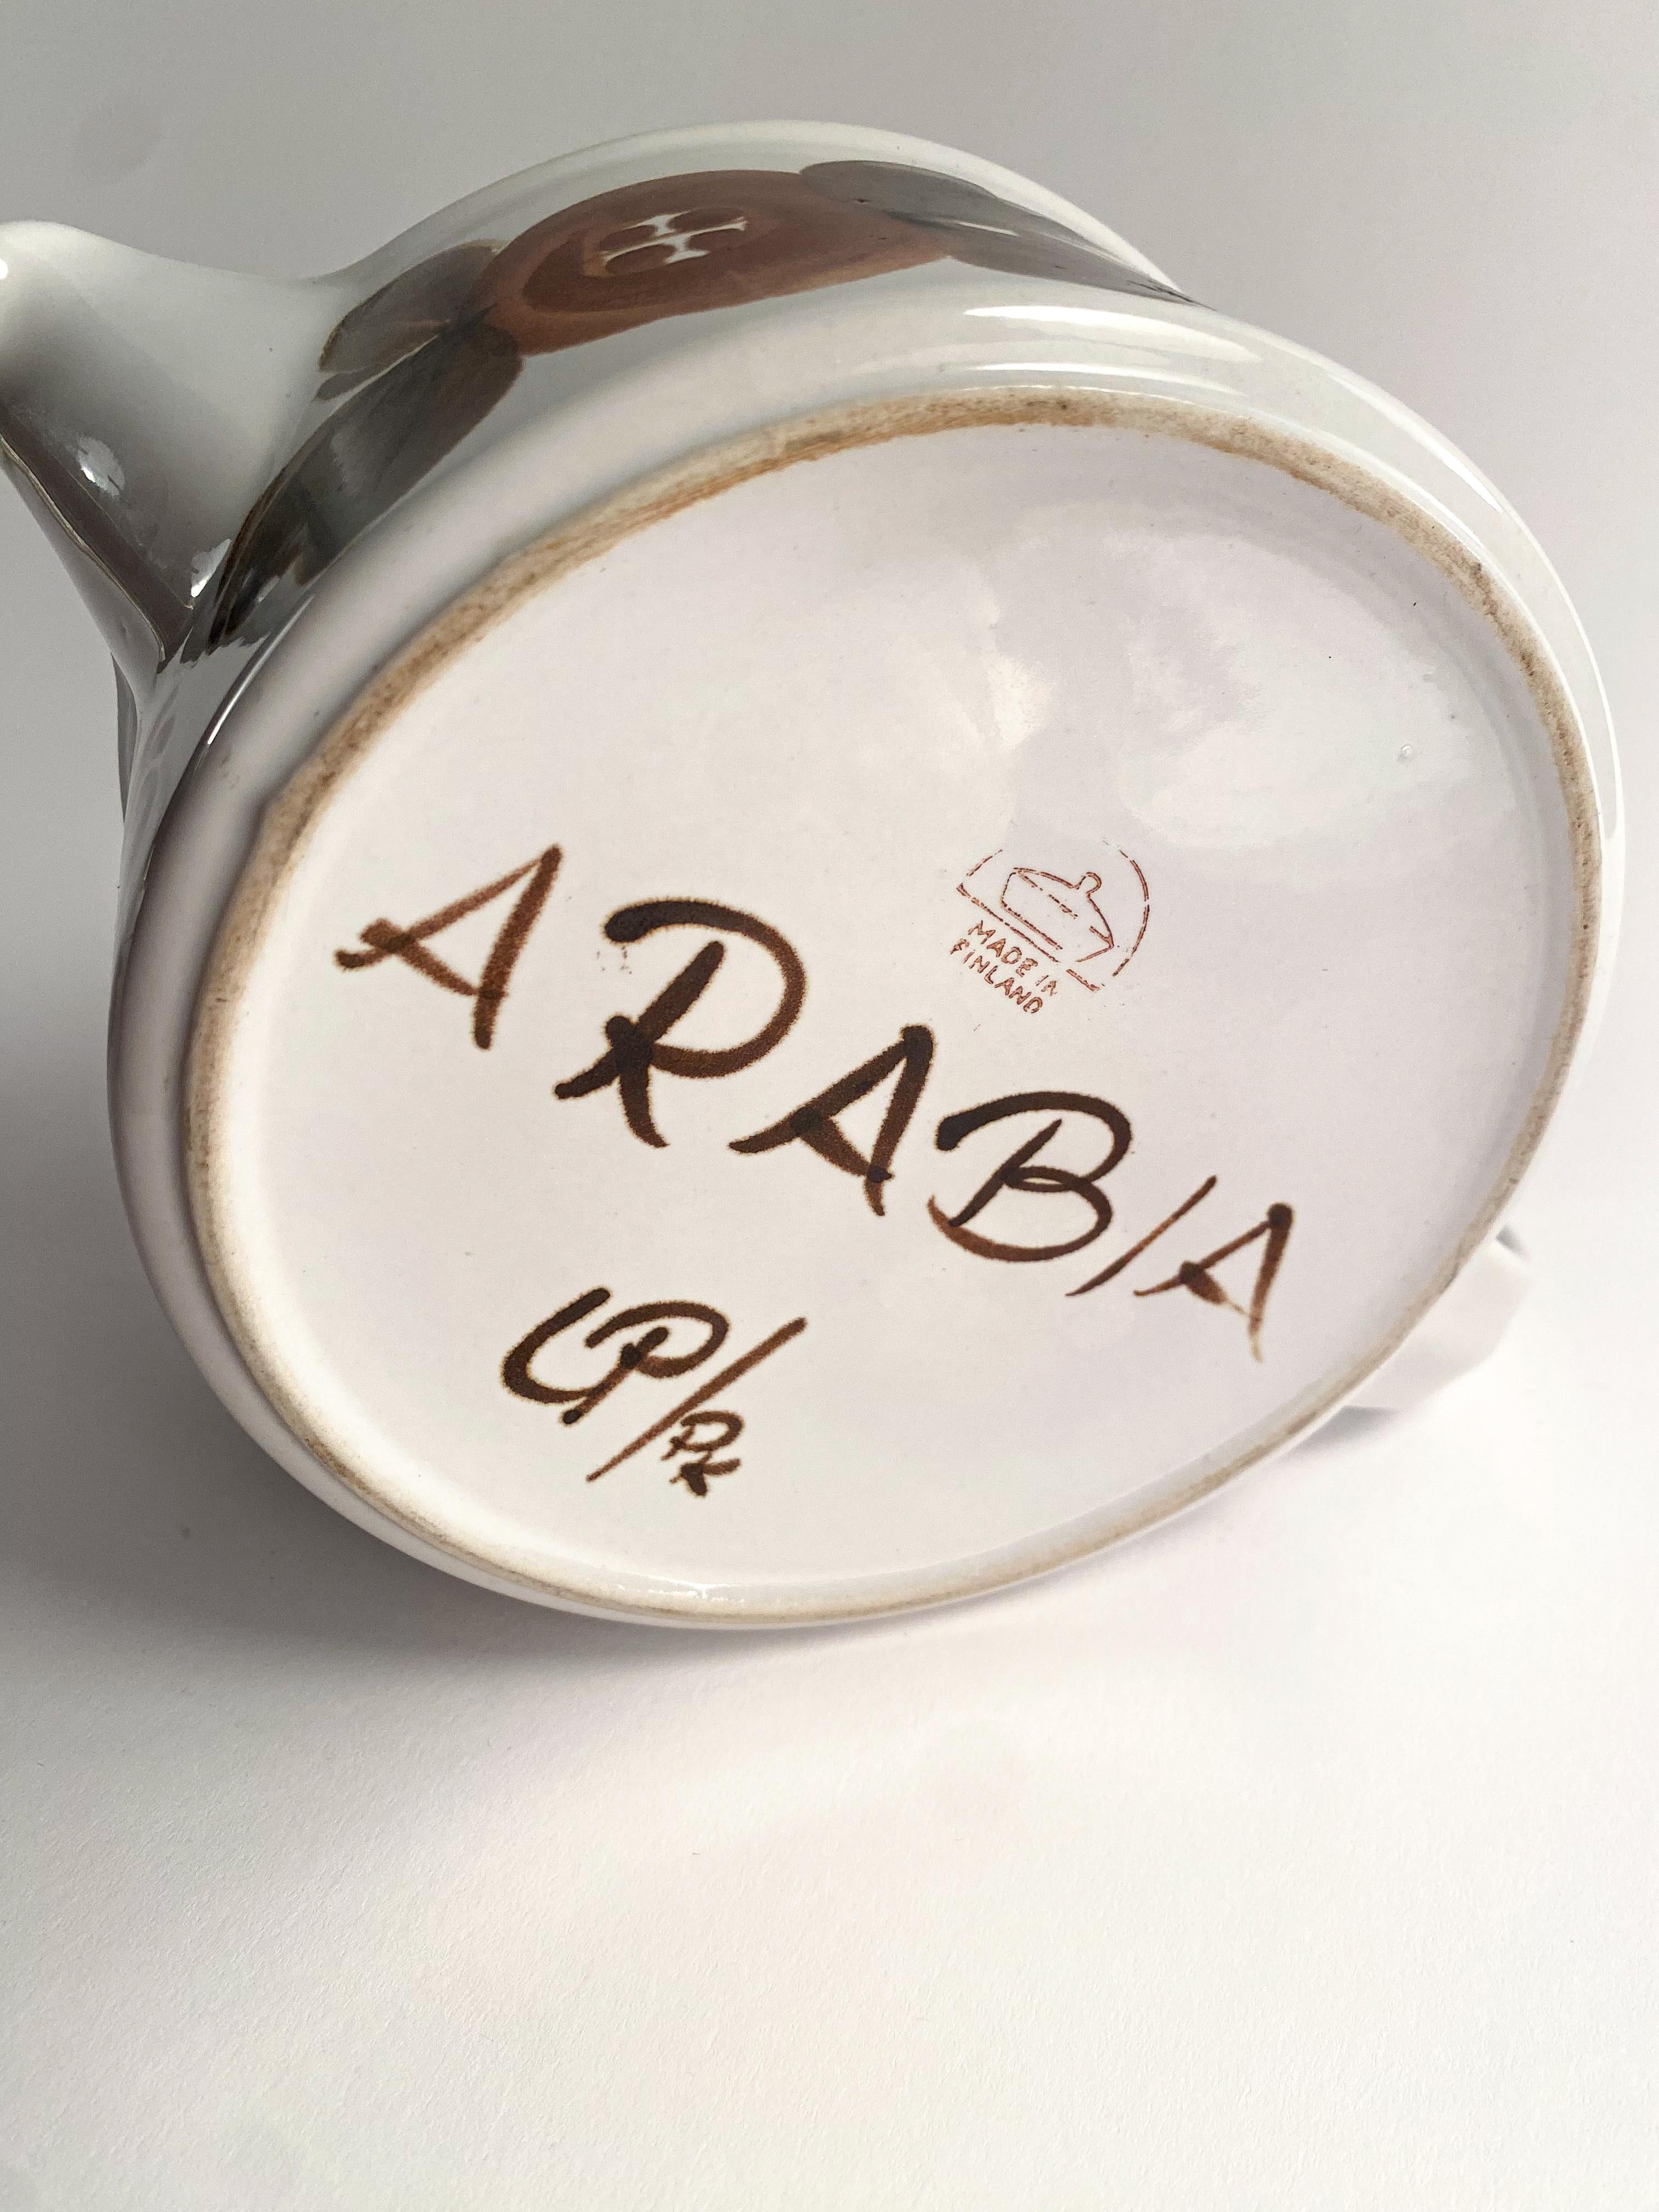 Stoneware Vintage Arabia Tea Pot by Ulla Procope